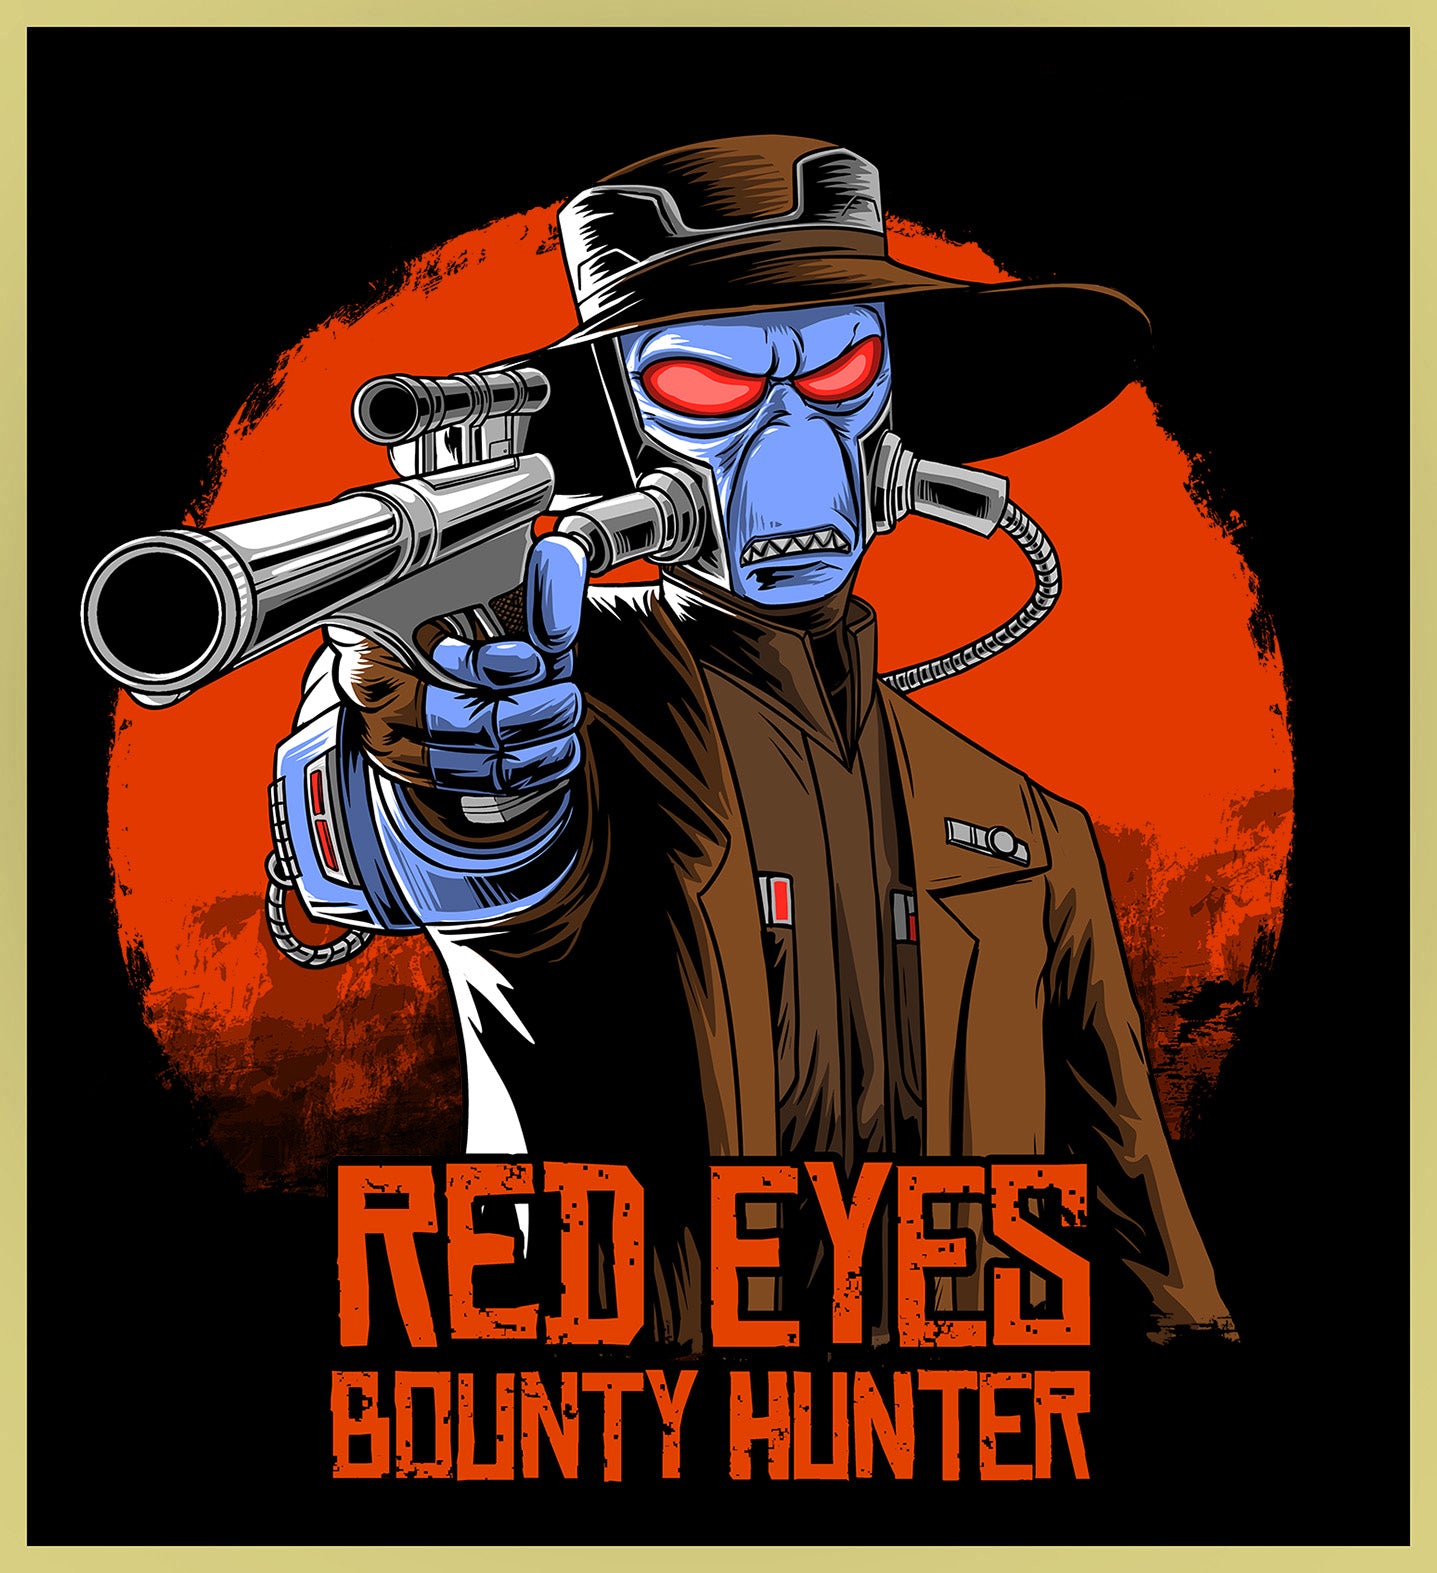 Bounty Hunter in Red